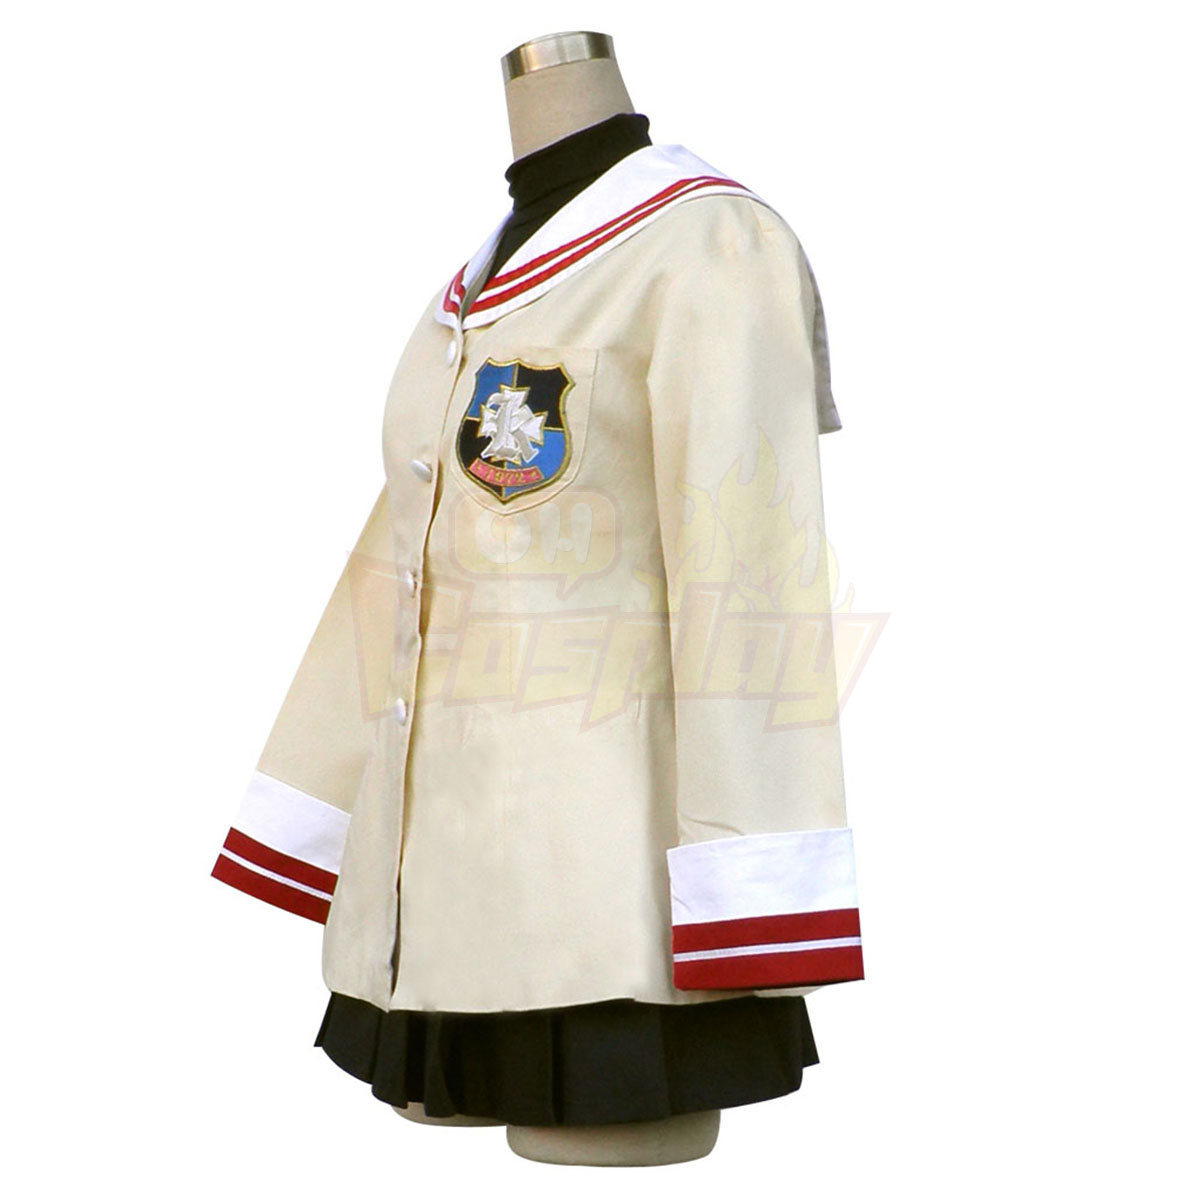 Deluxe Clannad Nagisa Furukawa High School Female Winter Uniform Blue Badge Costumes